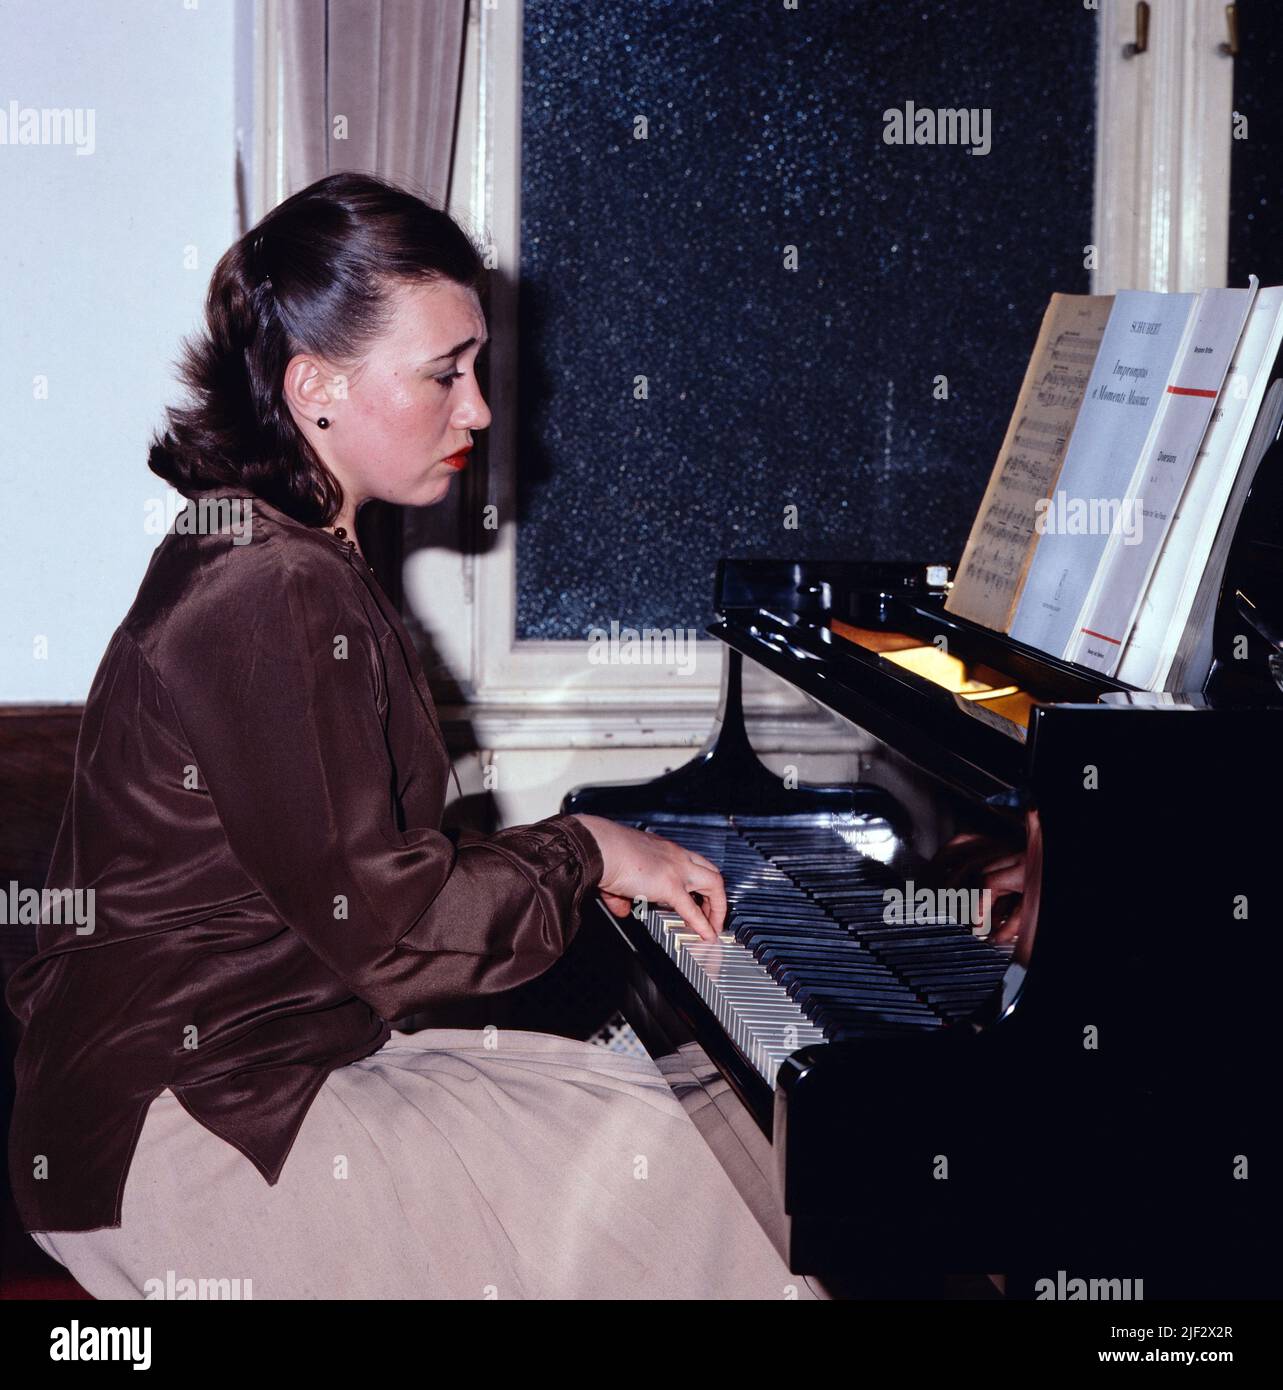 Wiktorija Walentinowna Postnikowa, russische Pianistin, hier am Klavier, Deutschland, circa 1975. Wiktorija Walentinowna Postnikowa, Russian pianist, here at the piano, Germany, circa 1975. Stock Photo